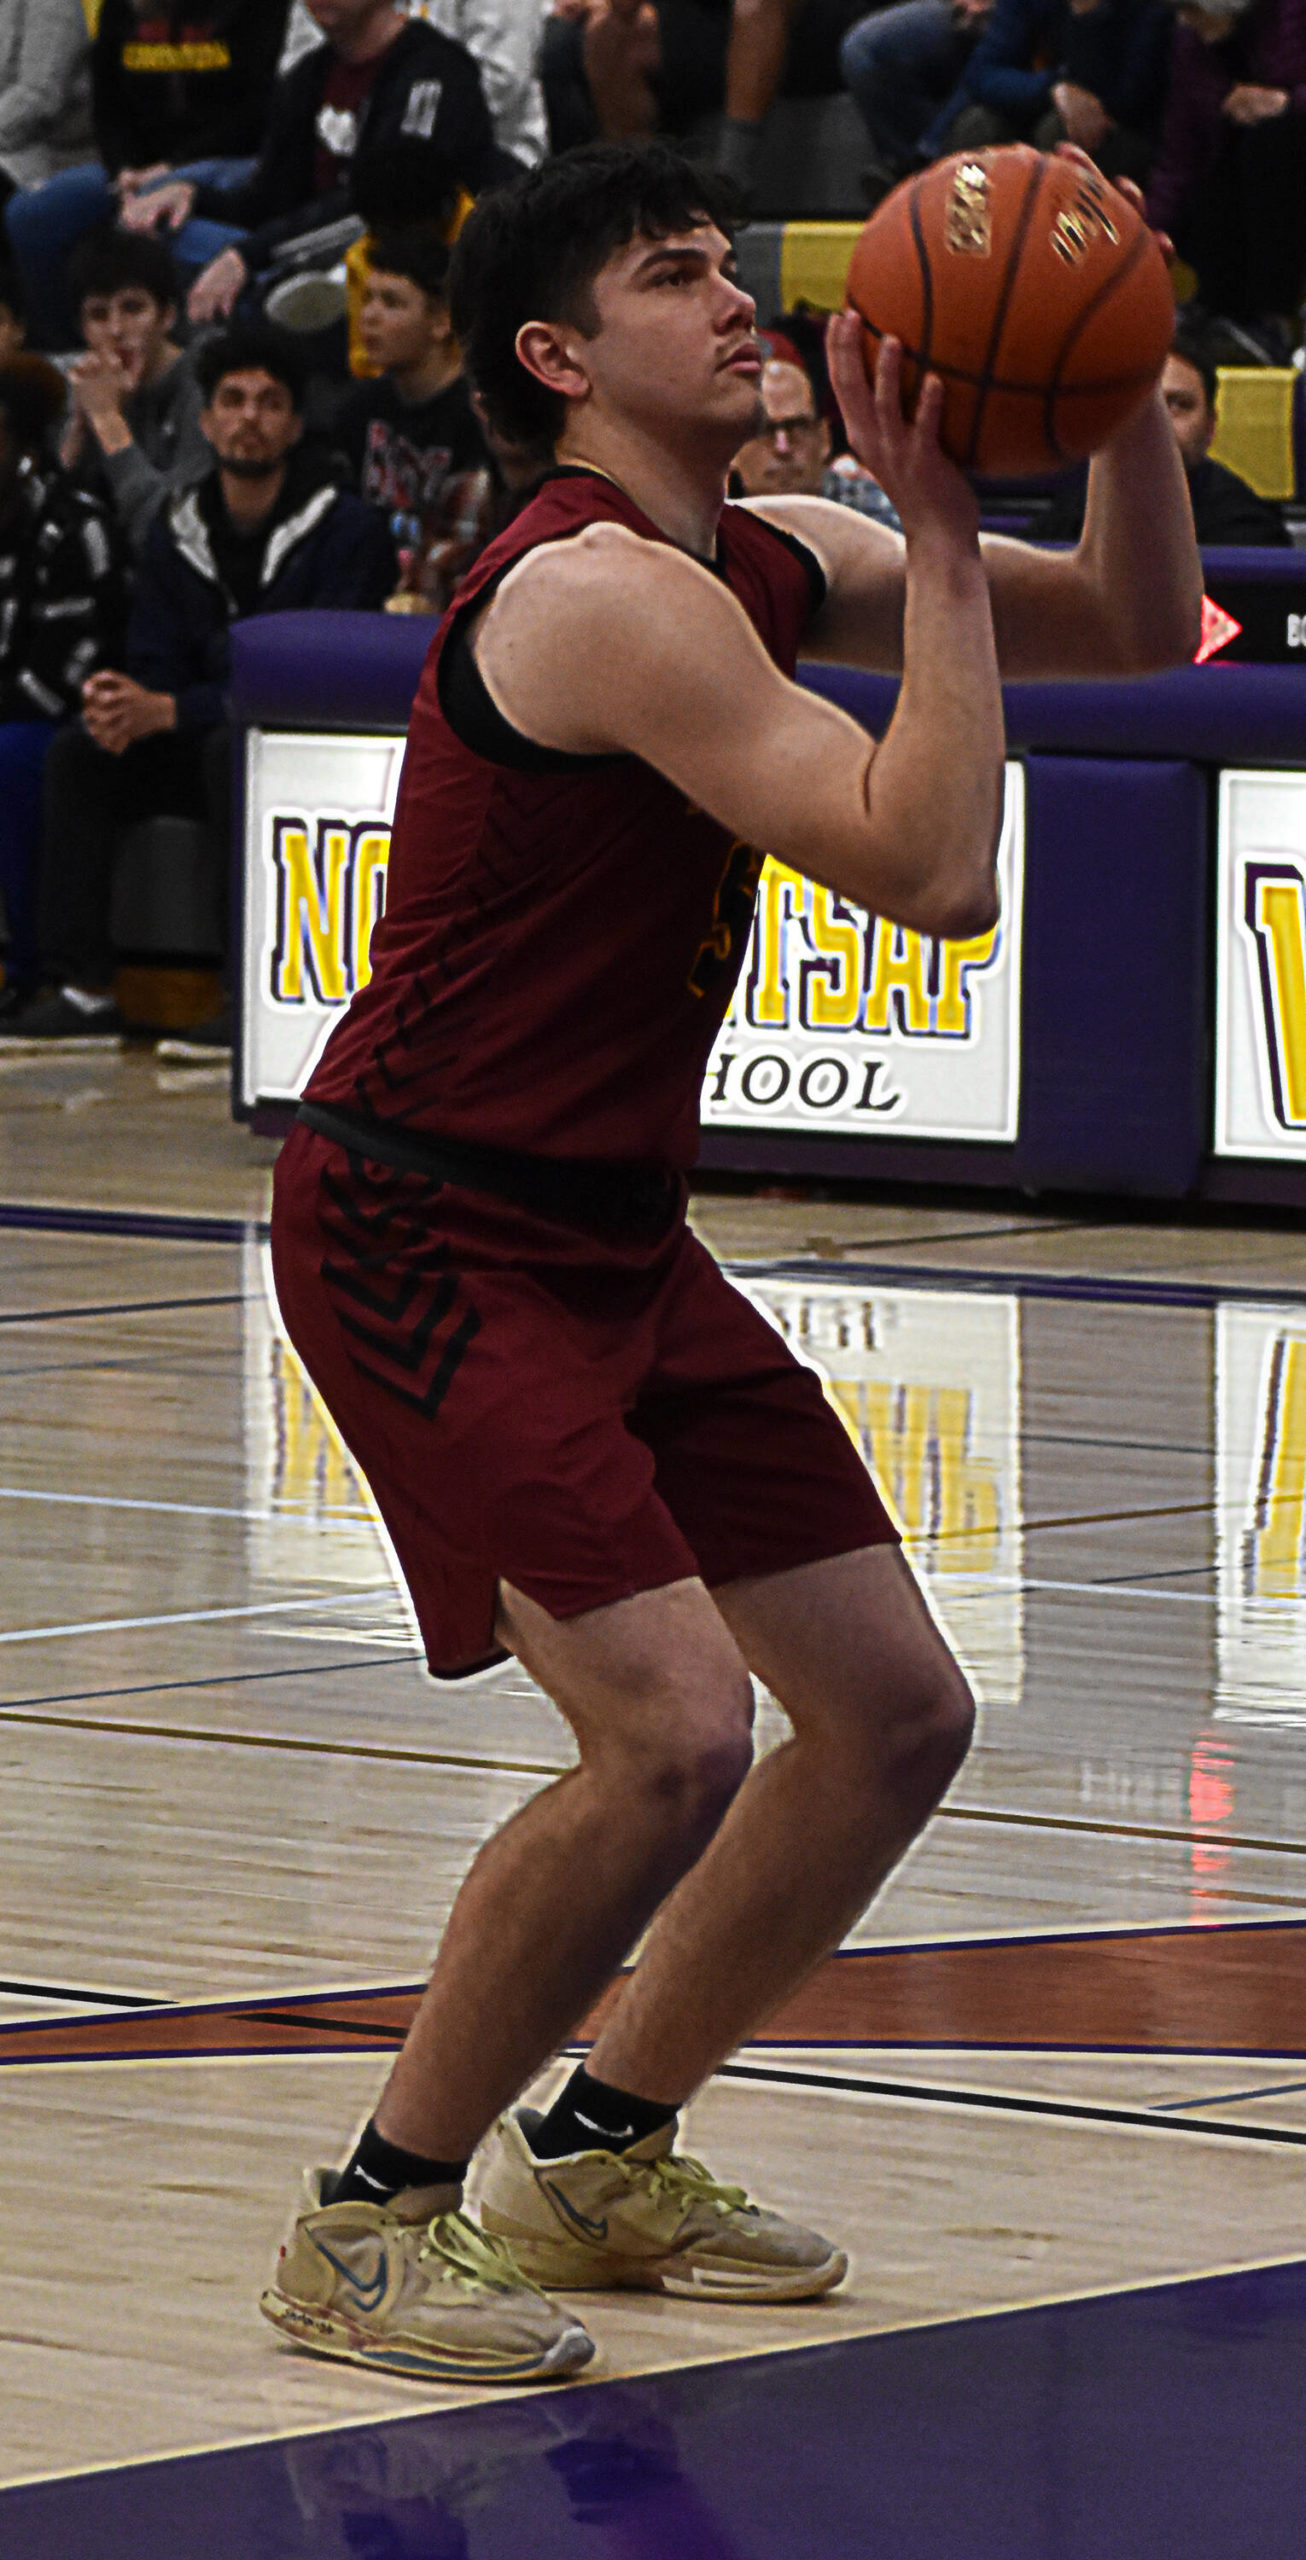 Dakota Standley led Kingston scoring 14 points.